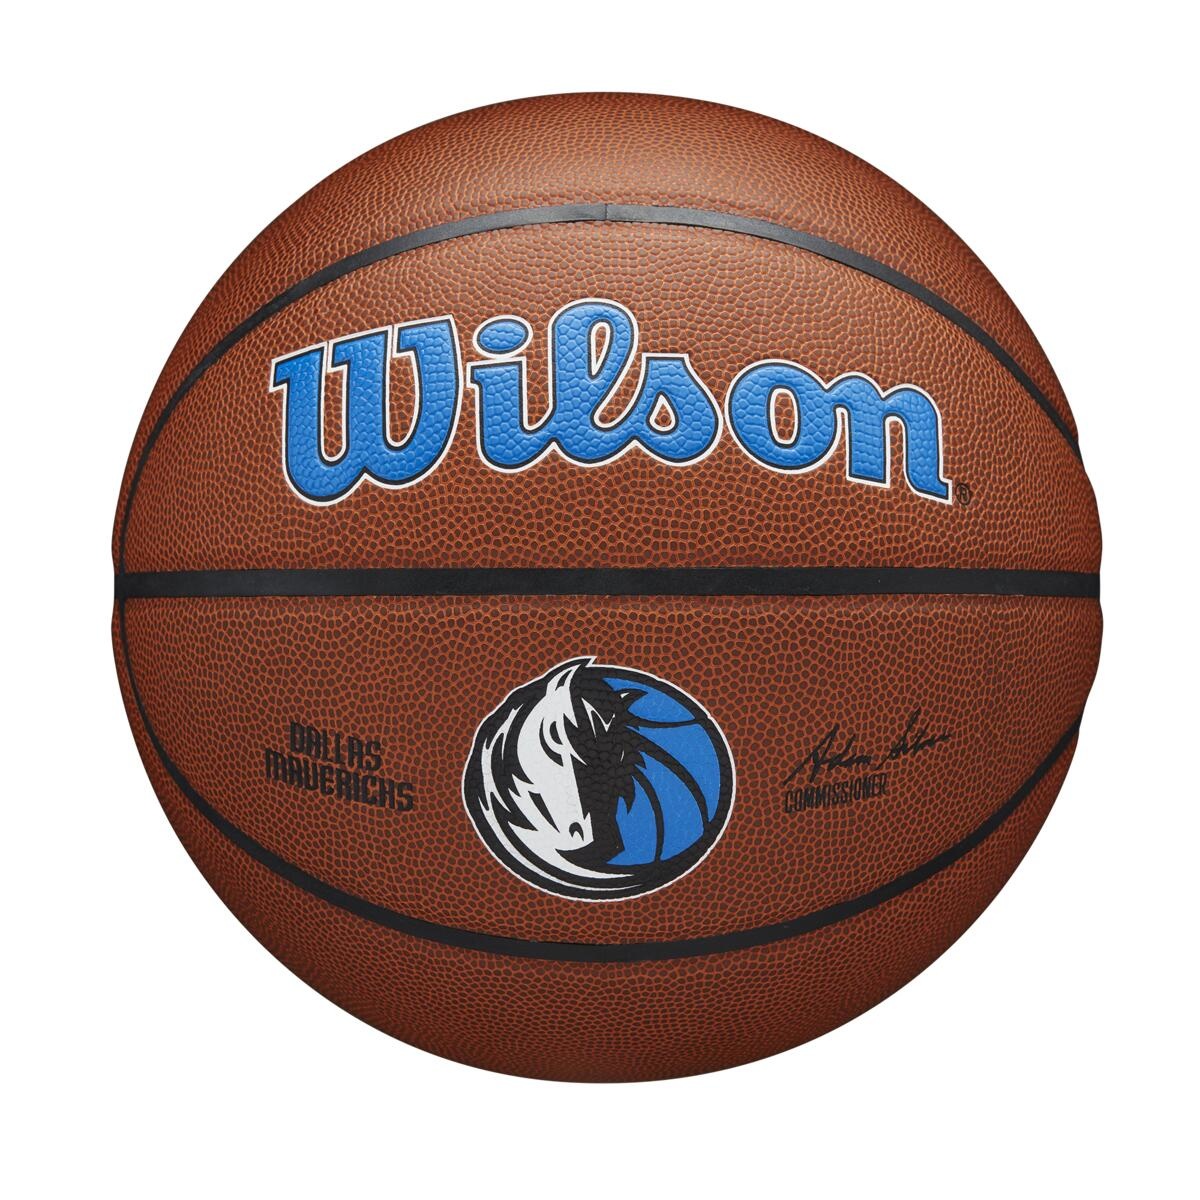 Wilson NBA Team Alliance Dallas Maverick - basketbal - blauw - maat 7